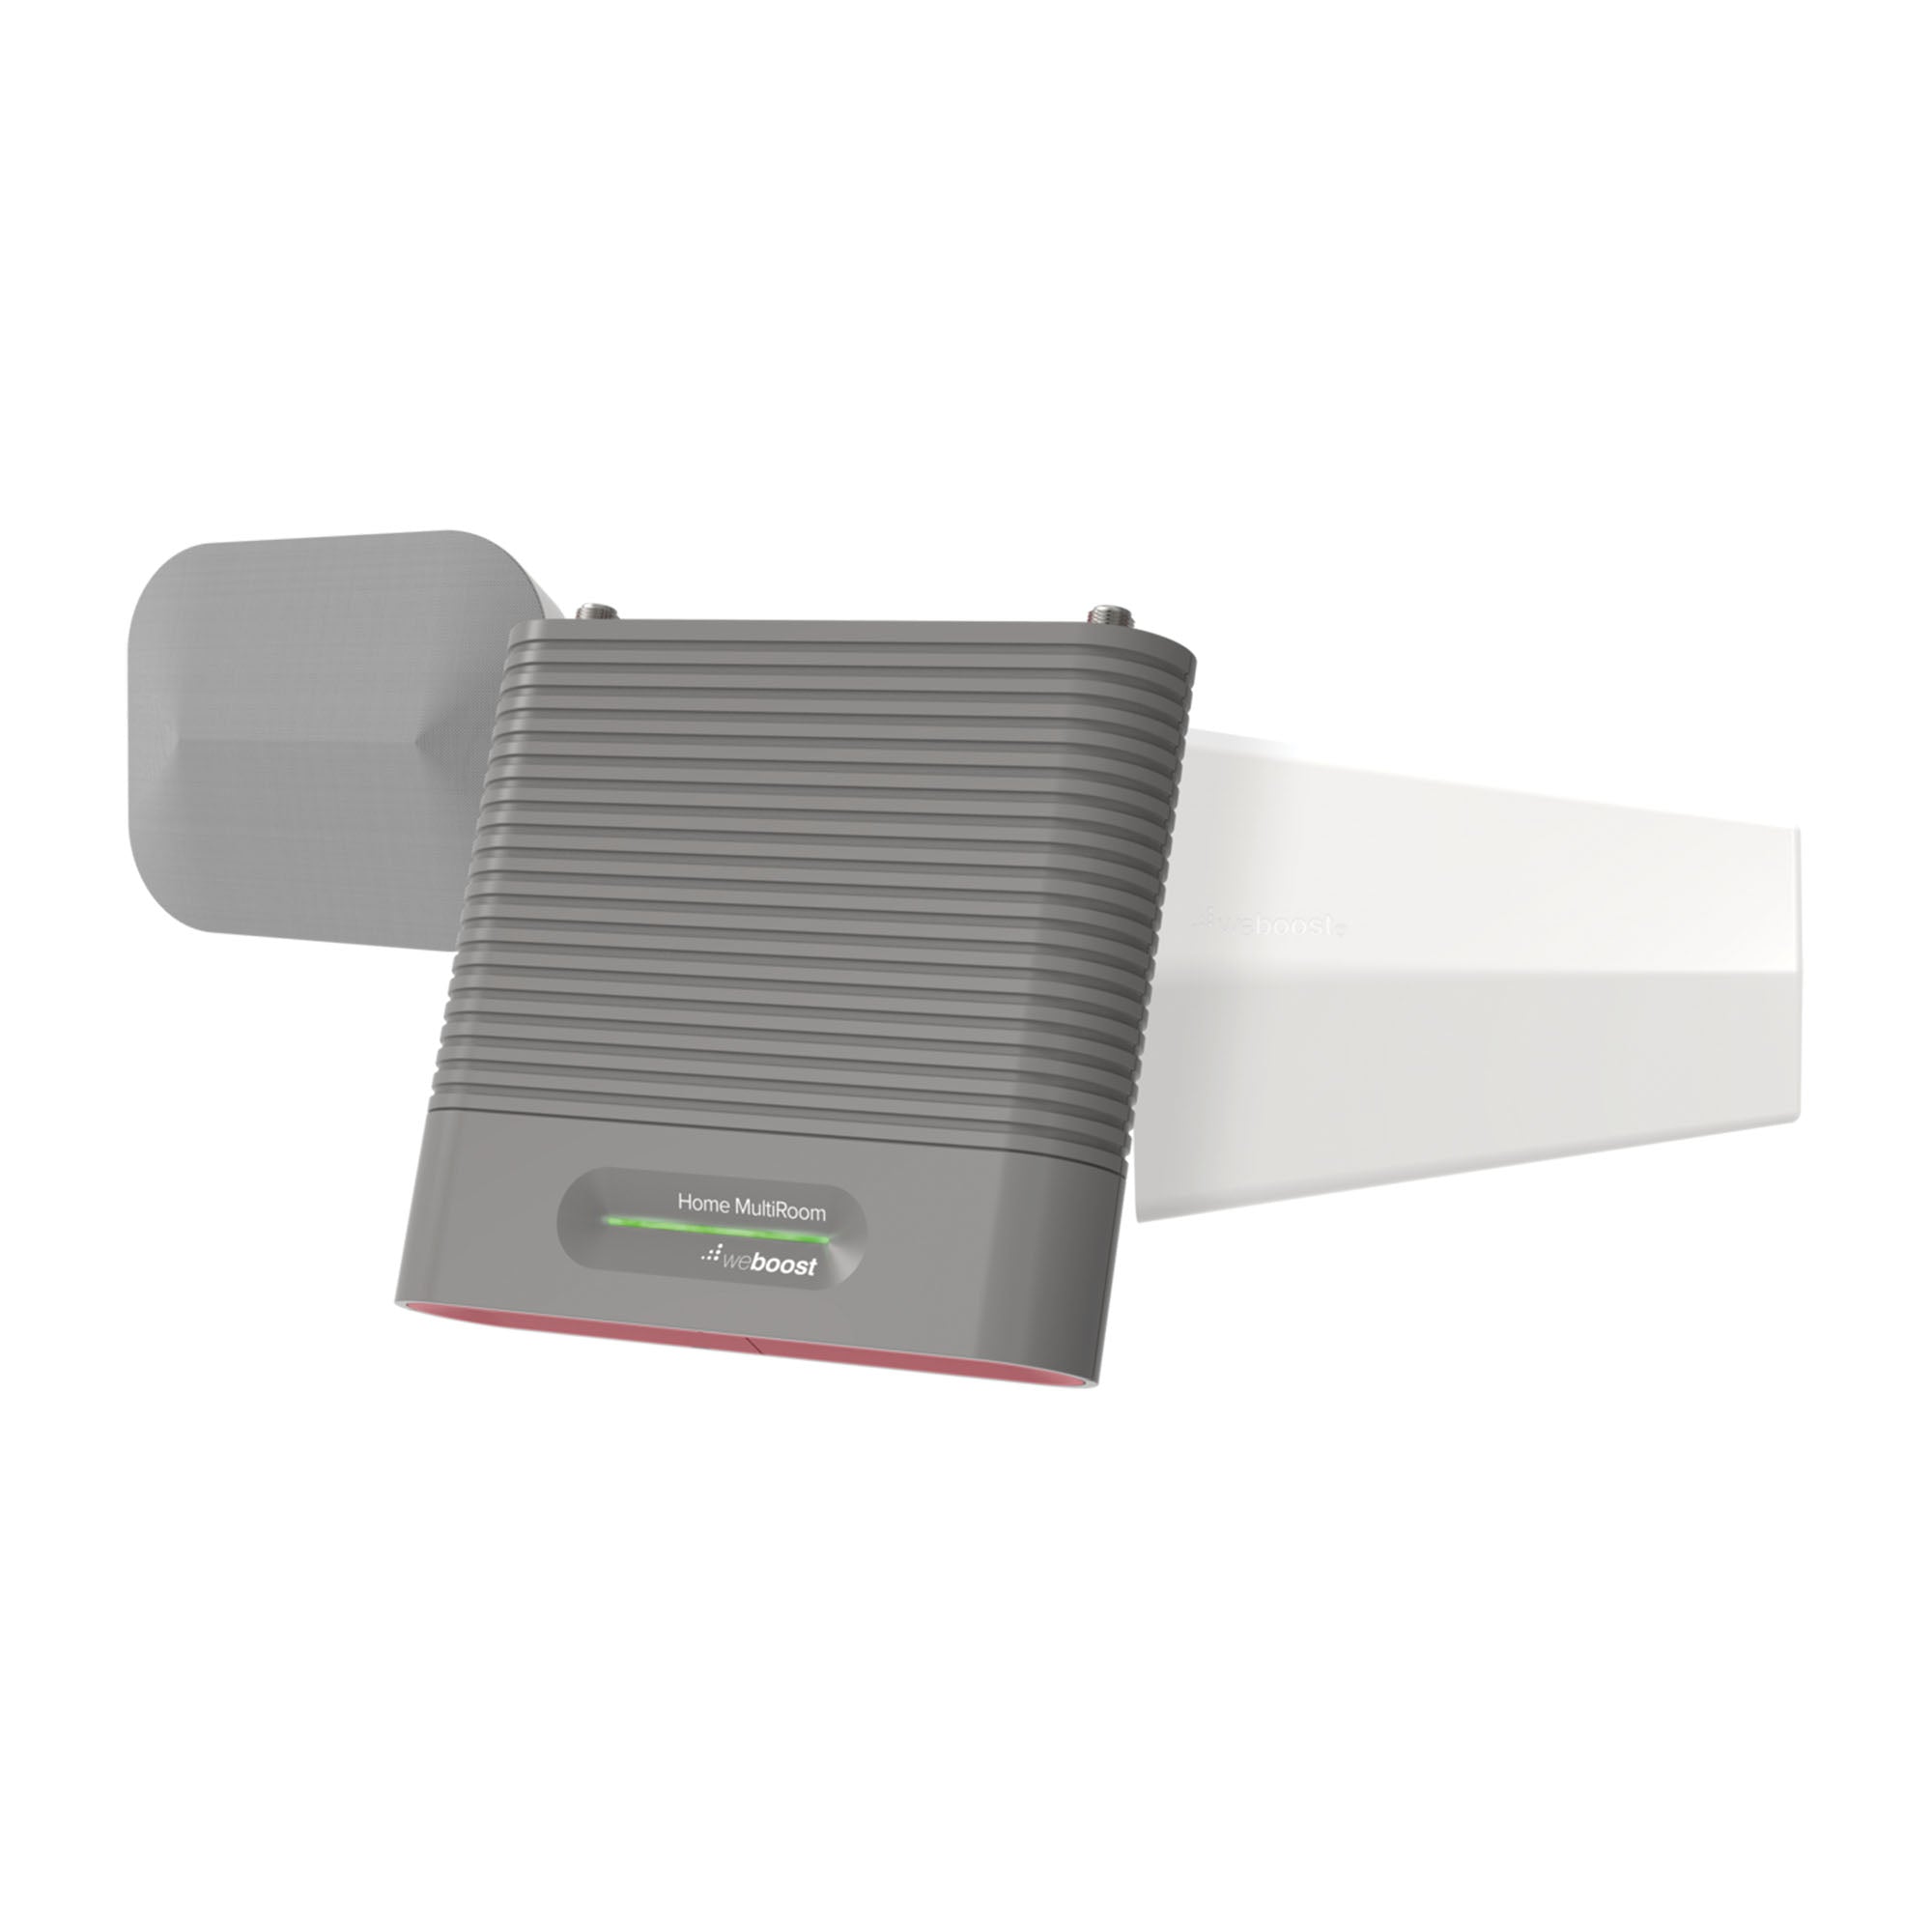 WeBoost Home MultiRoom In-Building Signal Booster Kit - 15-06492